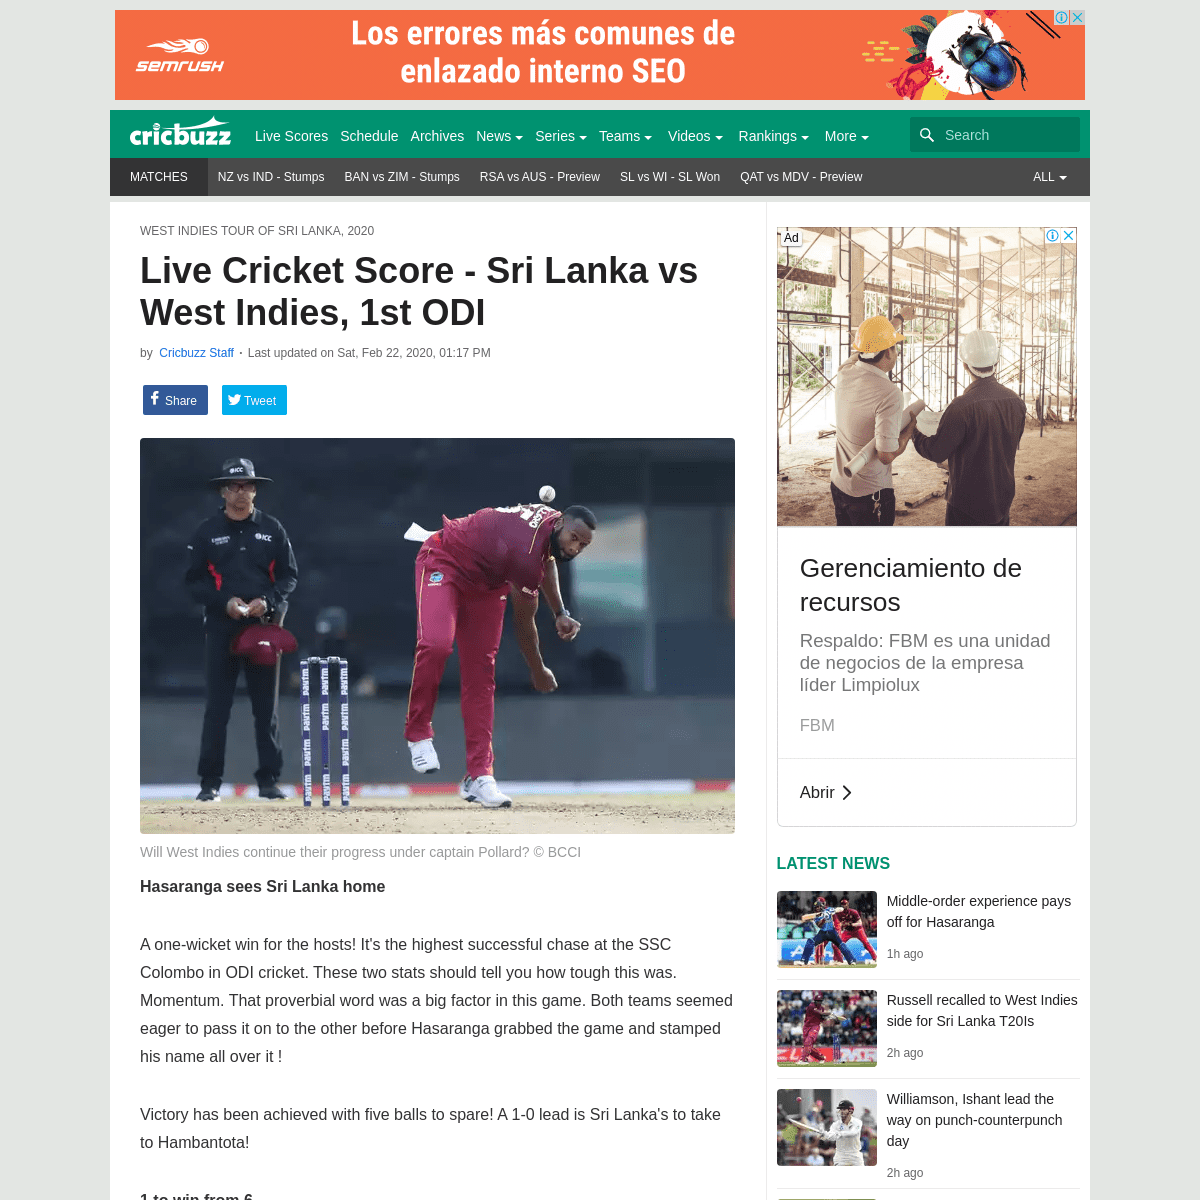 A complete backup of www.cricbuzz.com/cricket-news/112375/live-cricket-score-sri-lanka-vs-west-indies-1st-odi